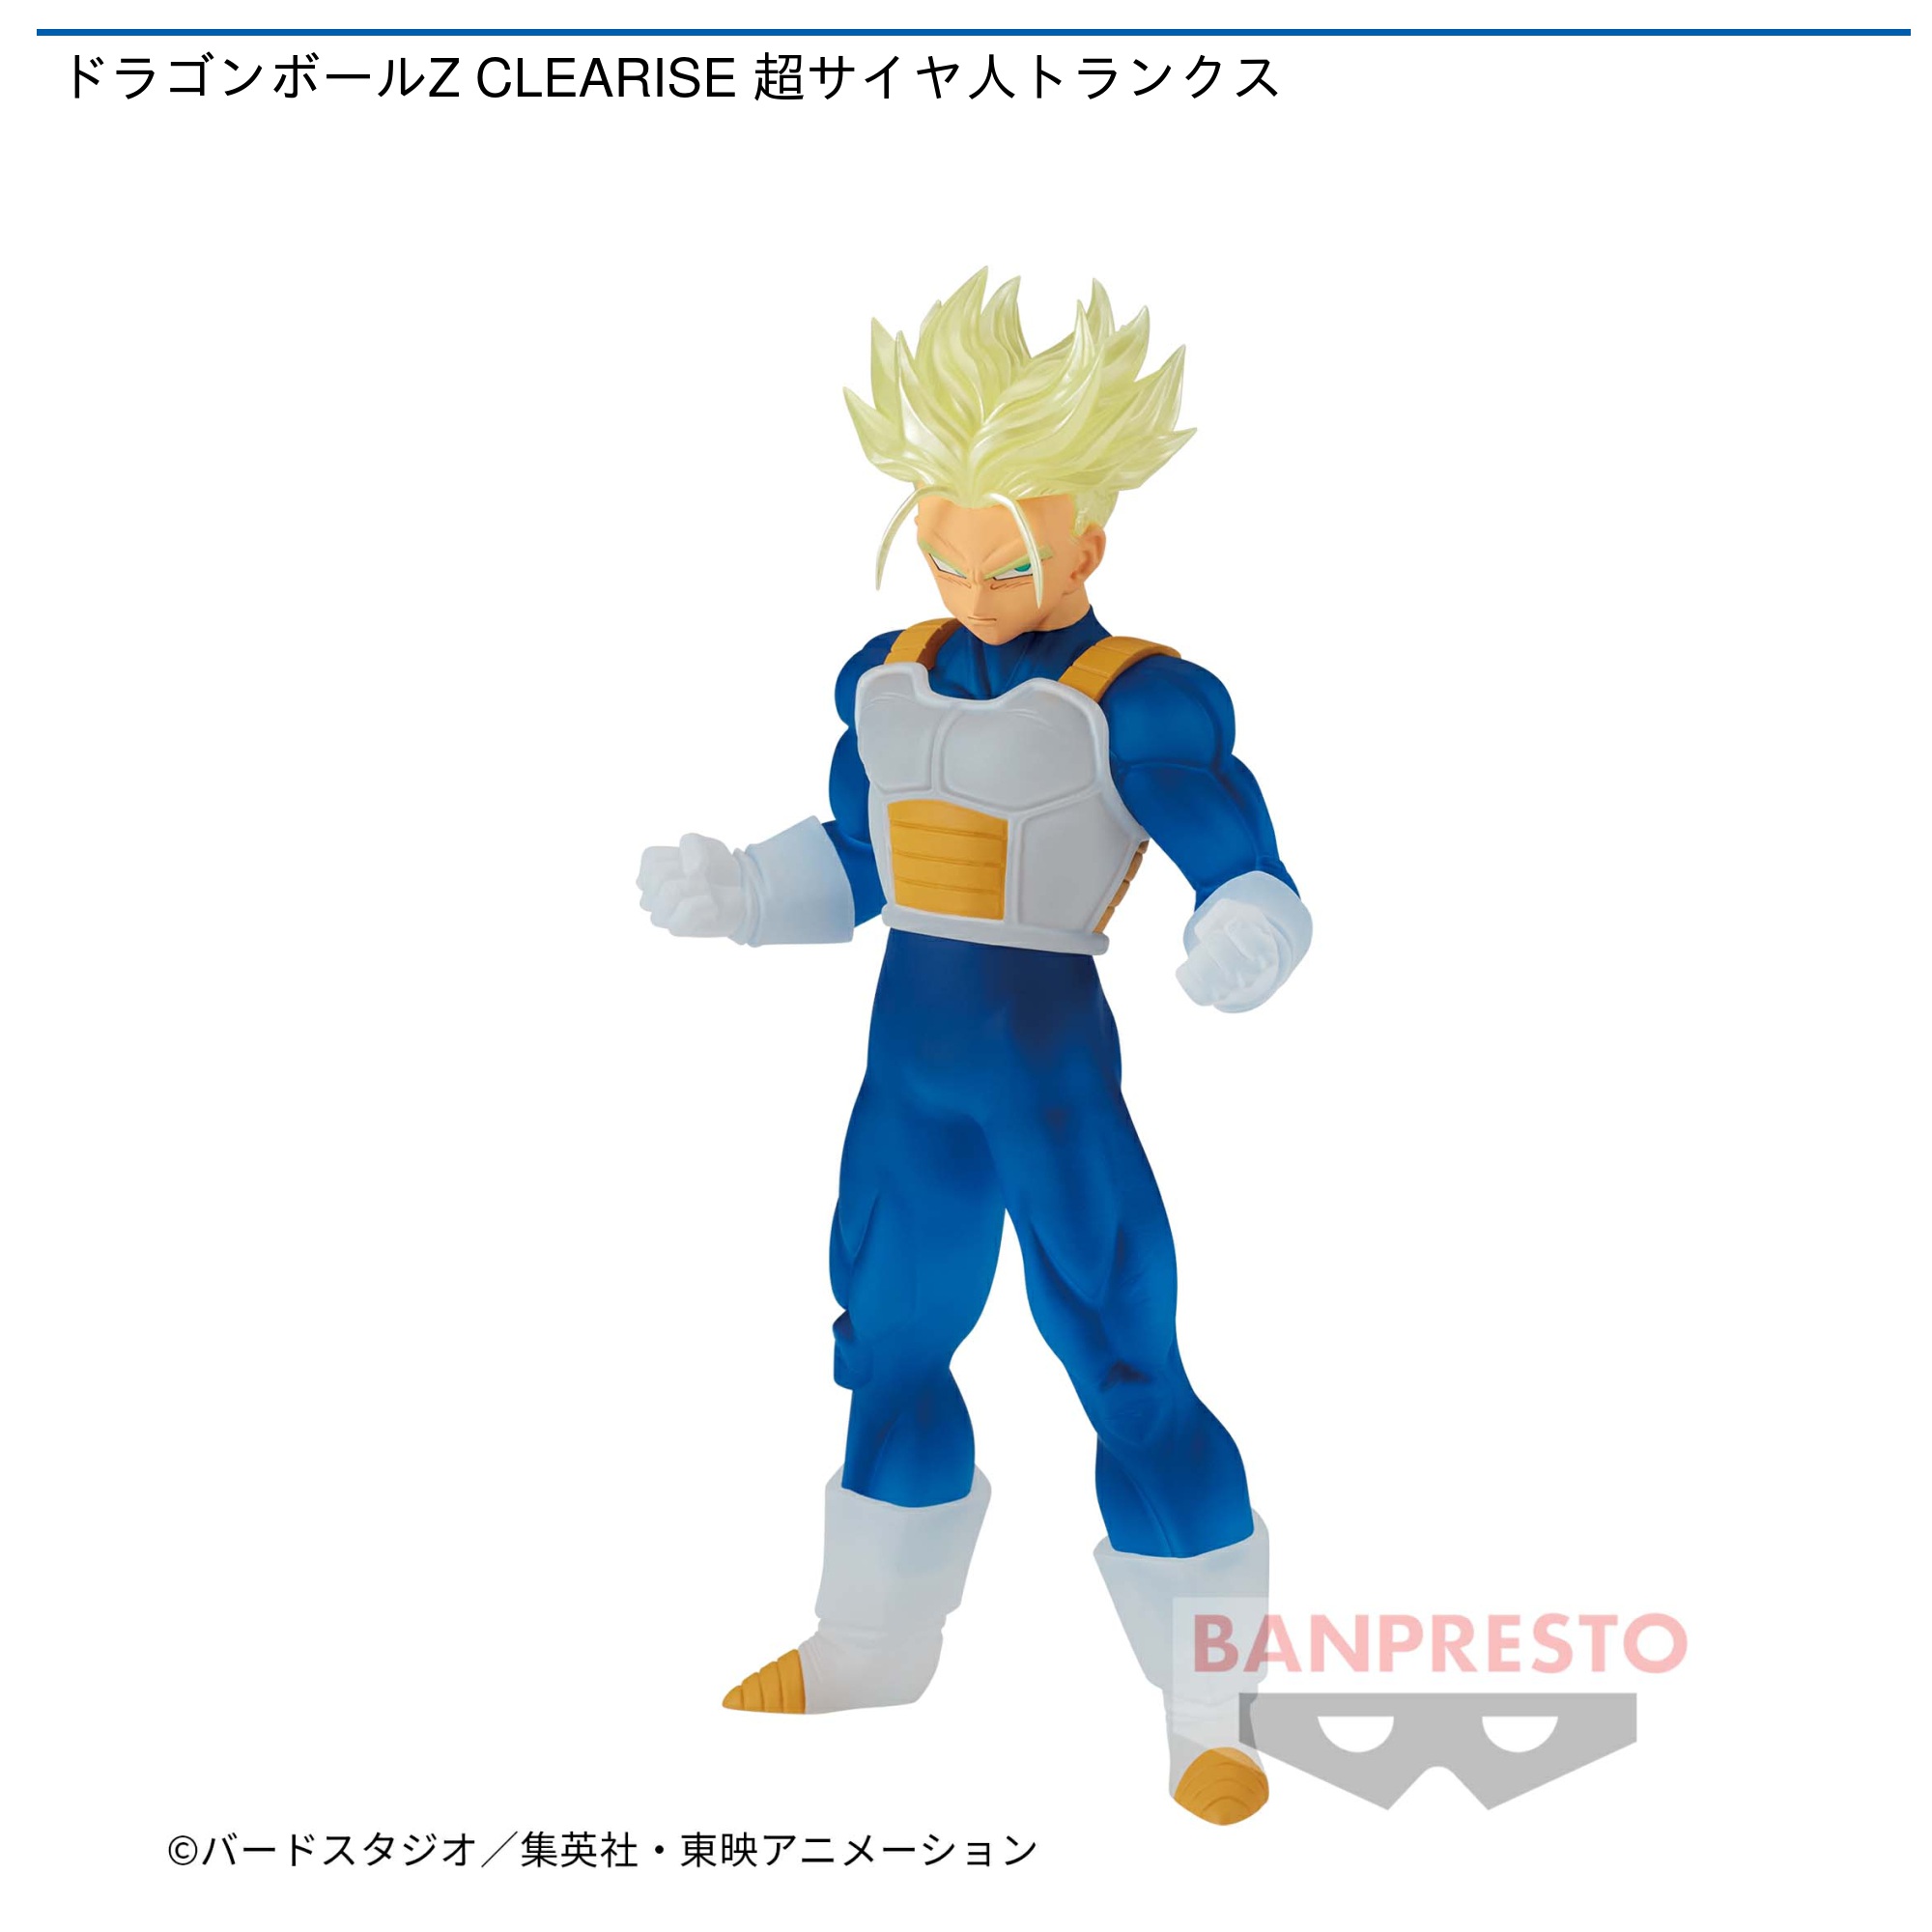 Banpresto Prize Dragon Ball Super Clearise Figure Super Saiyan God